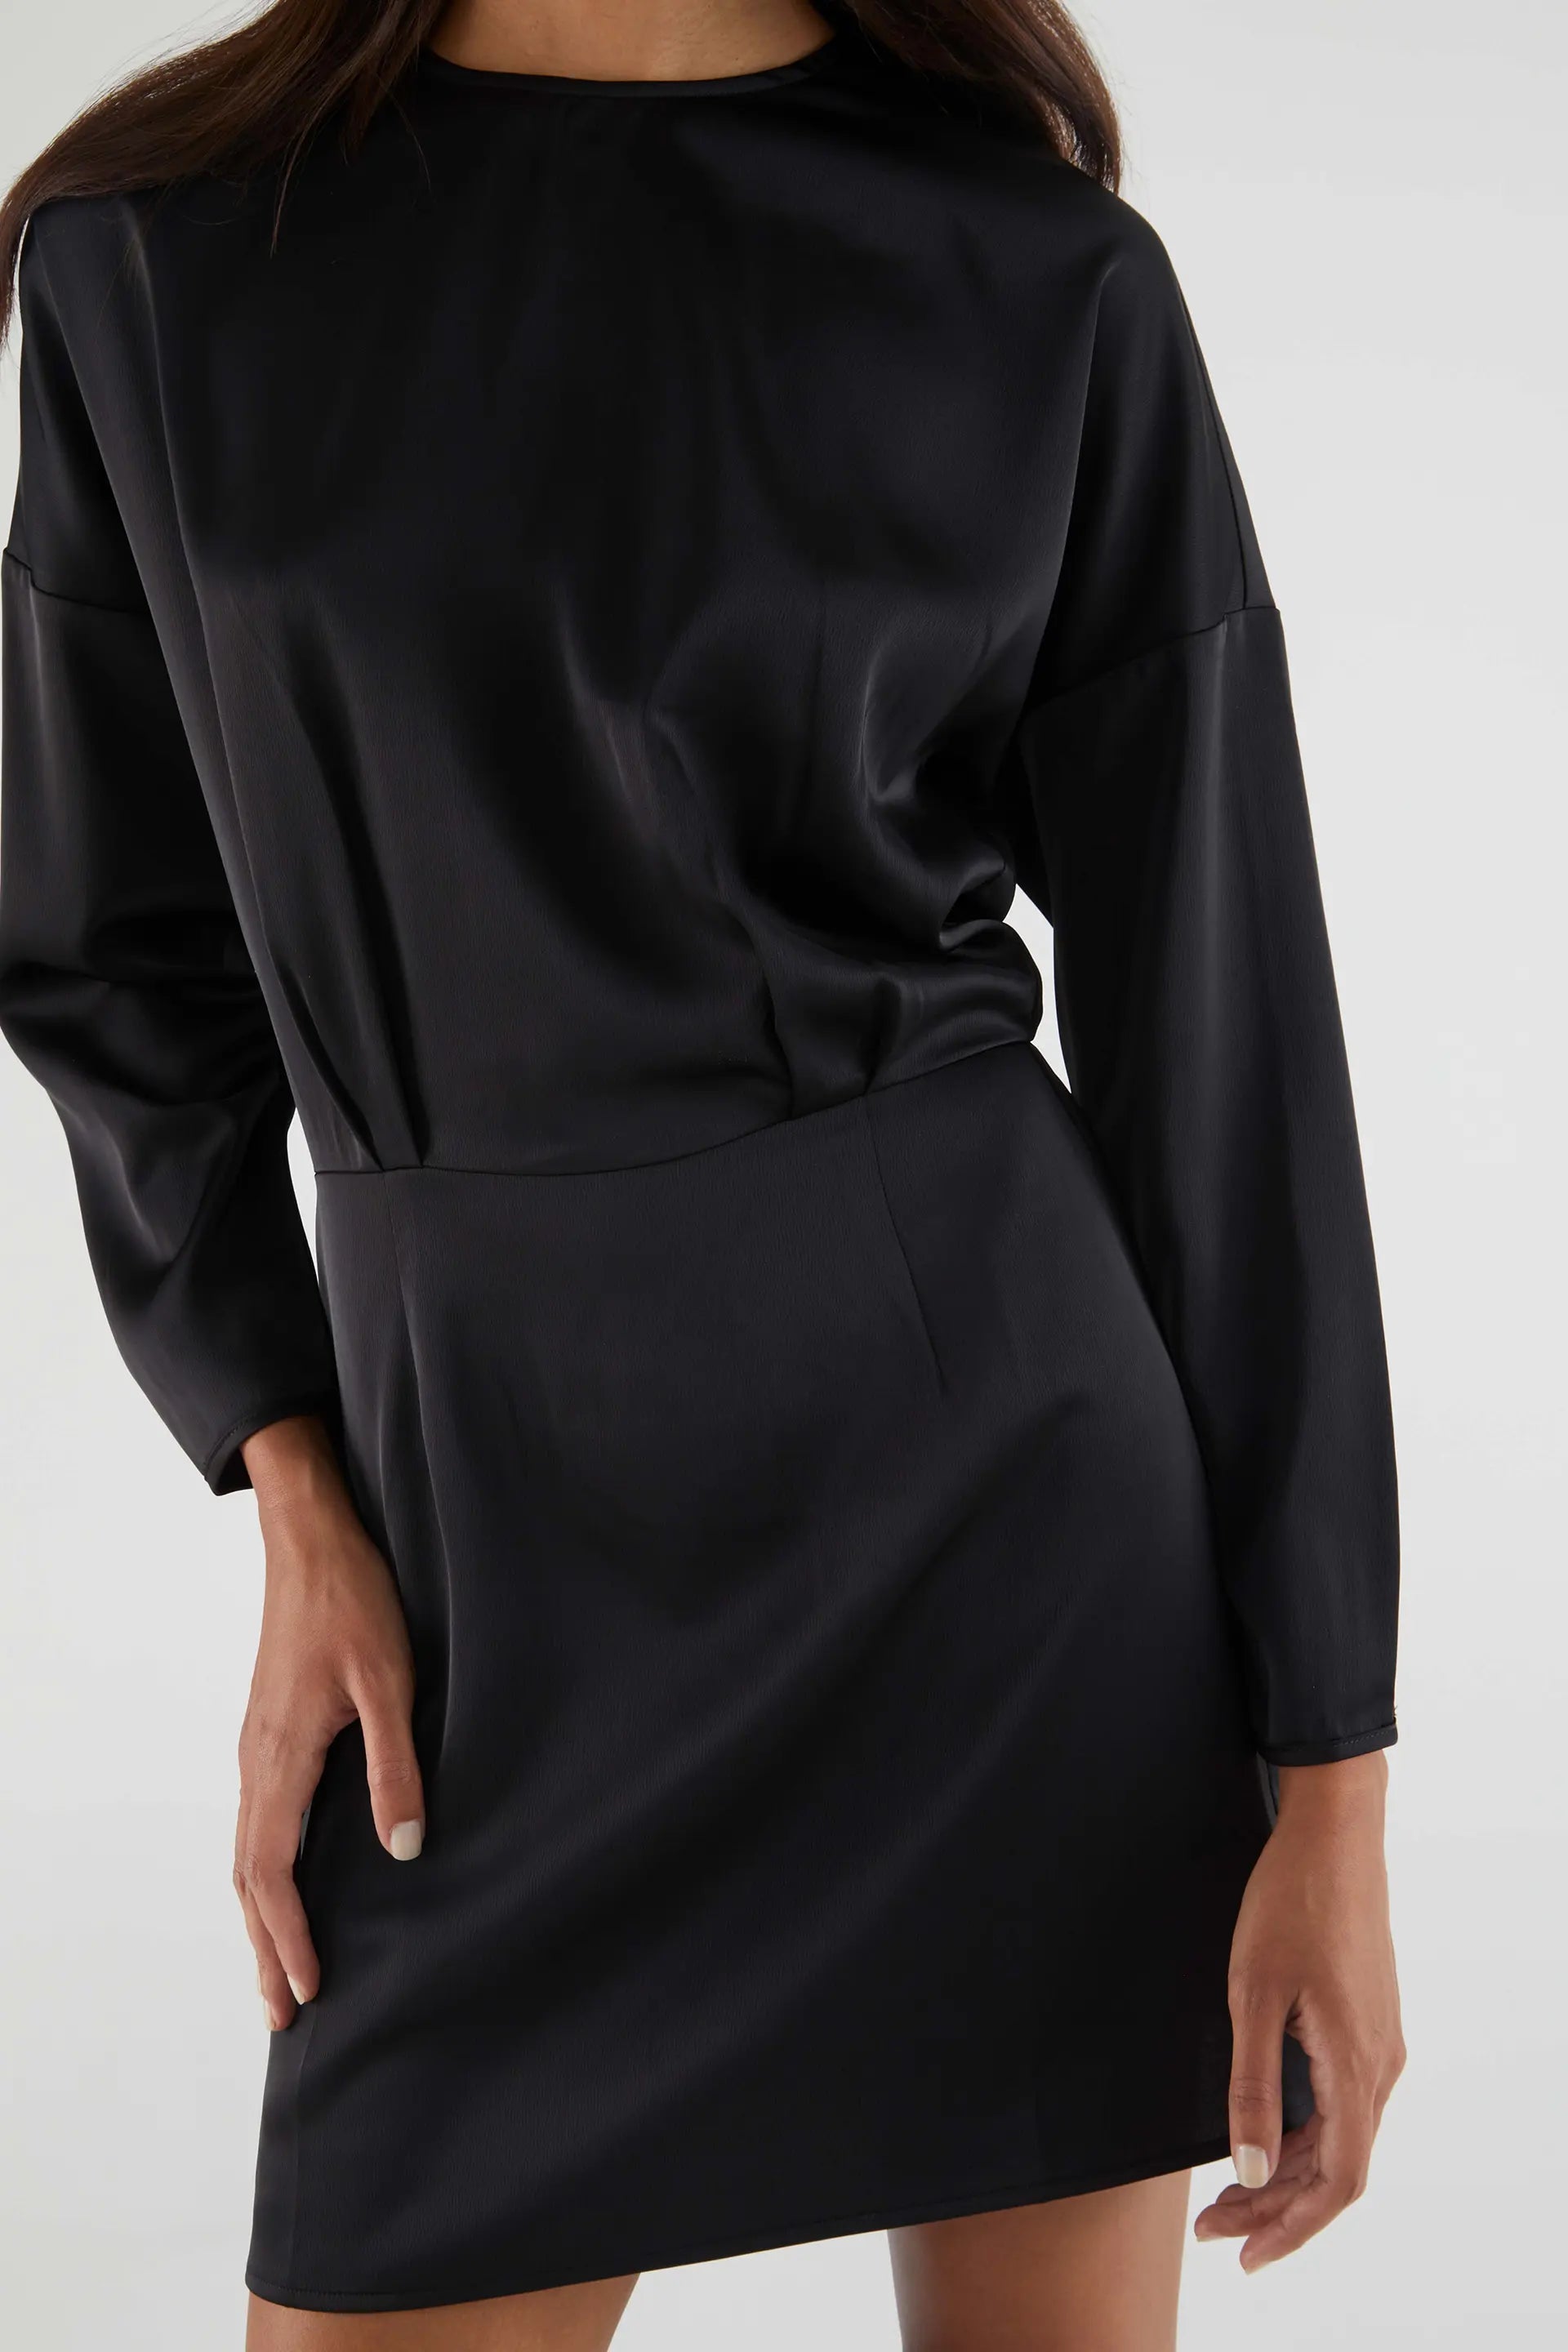 Short black satin dress with long sleeves - Compañía Fantástica